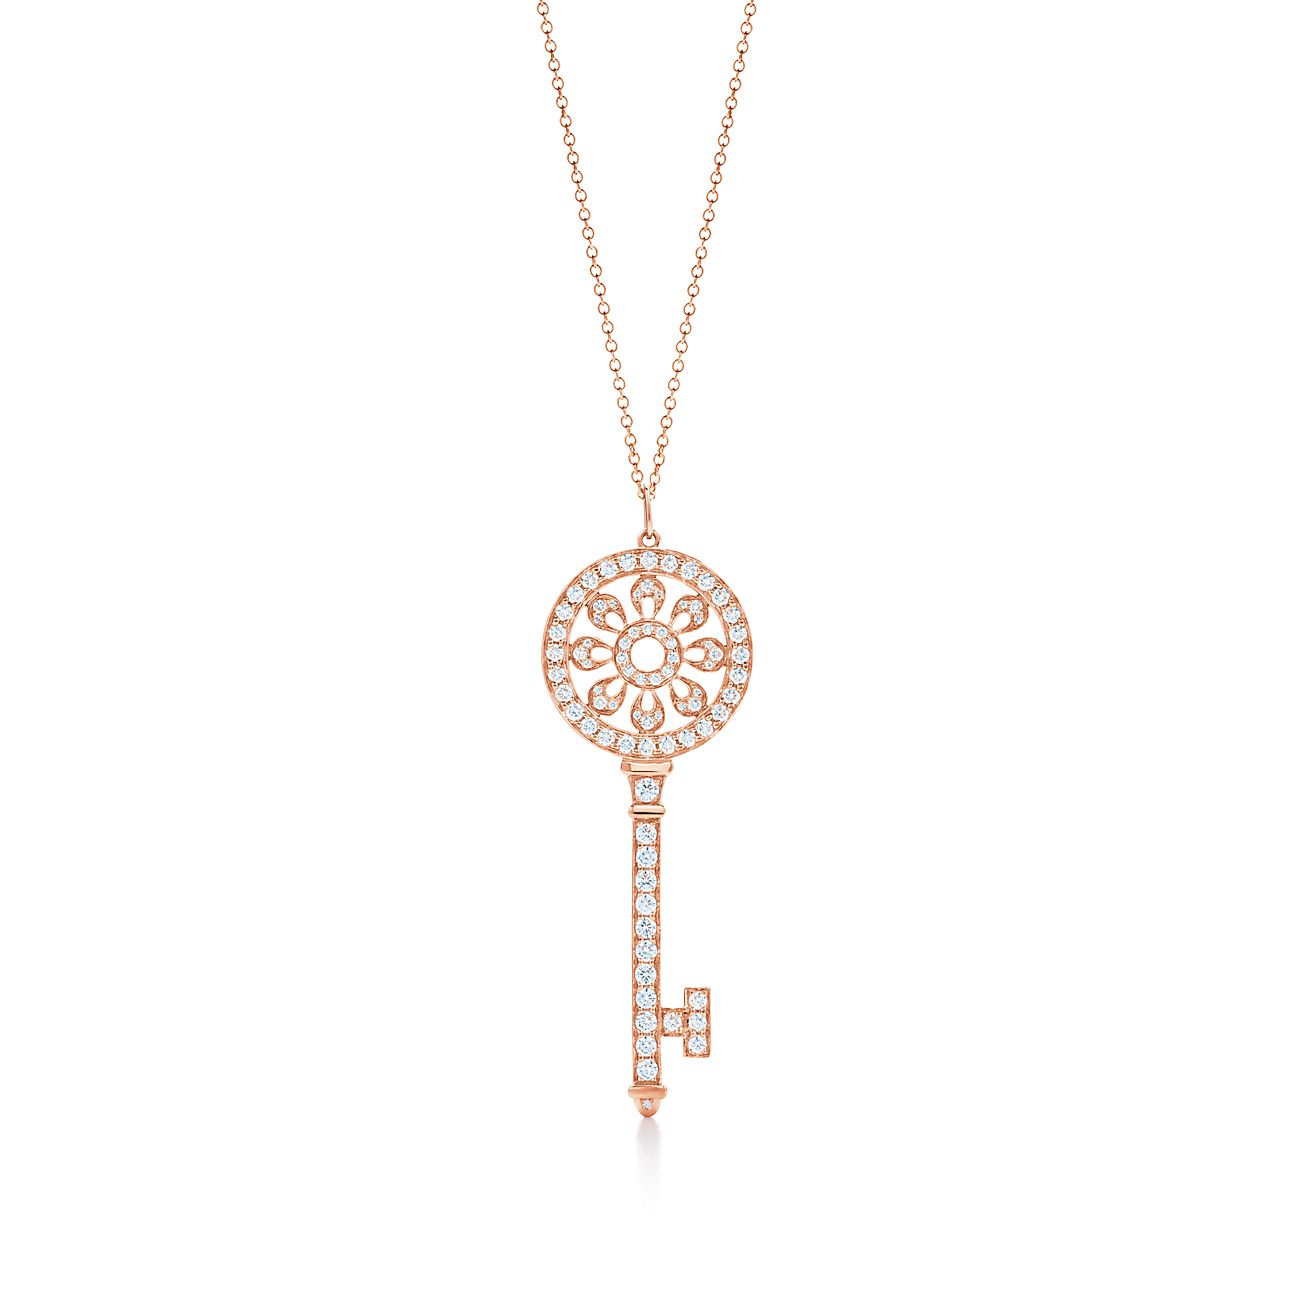 Tiffany Keys petals key pendant in 18k rose gold with diamonds